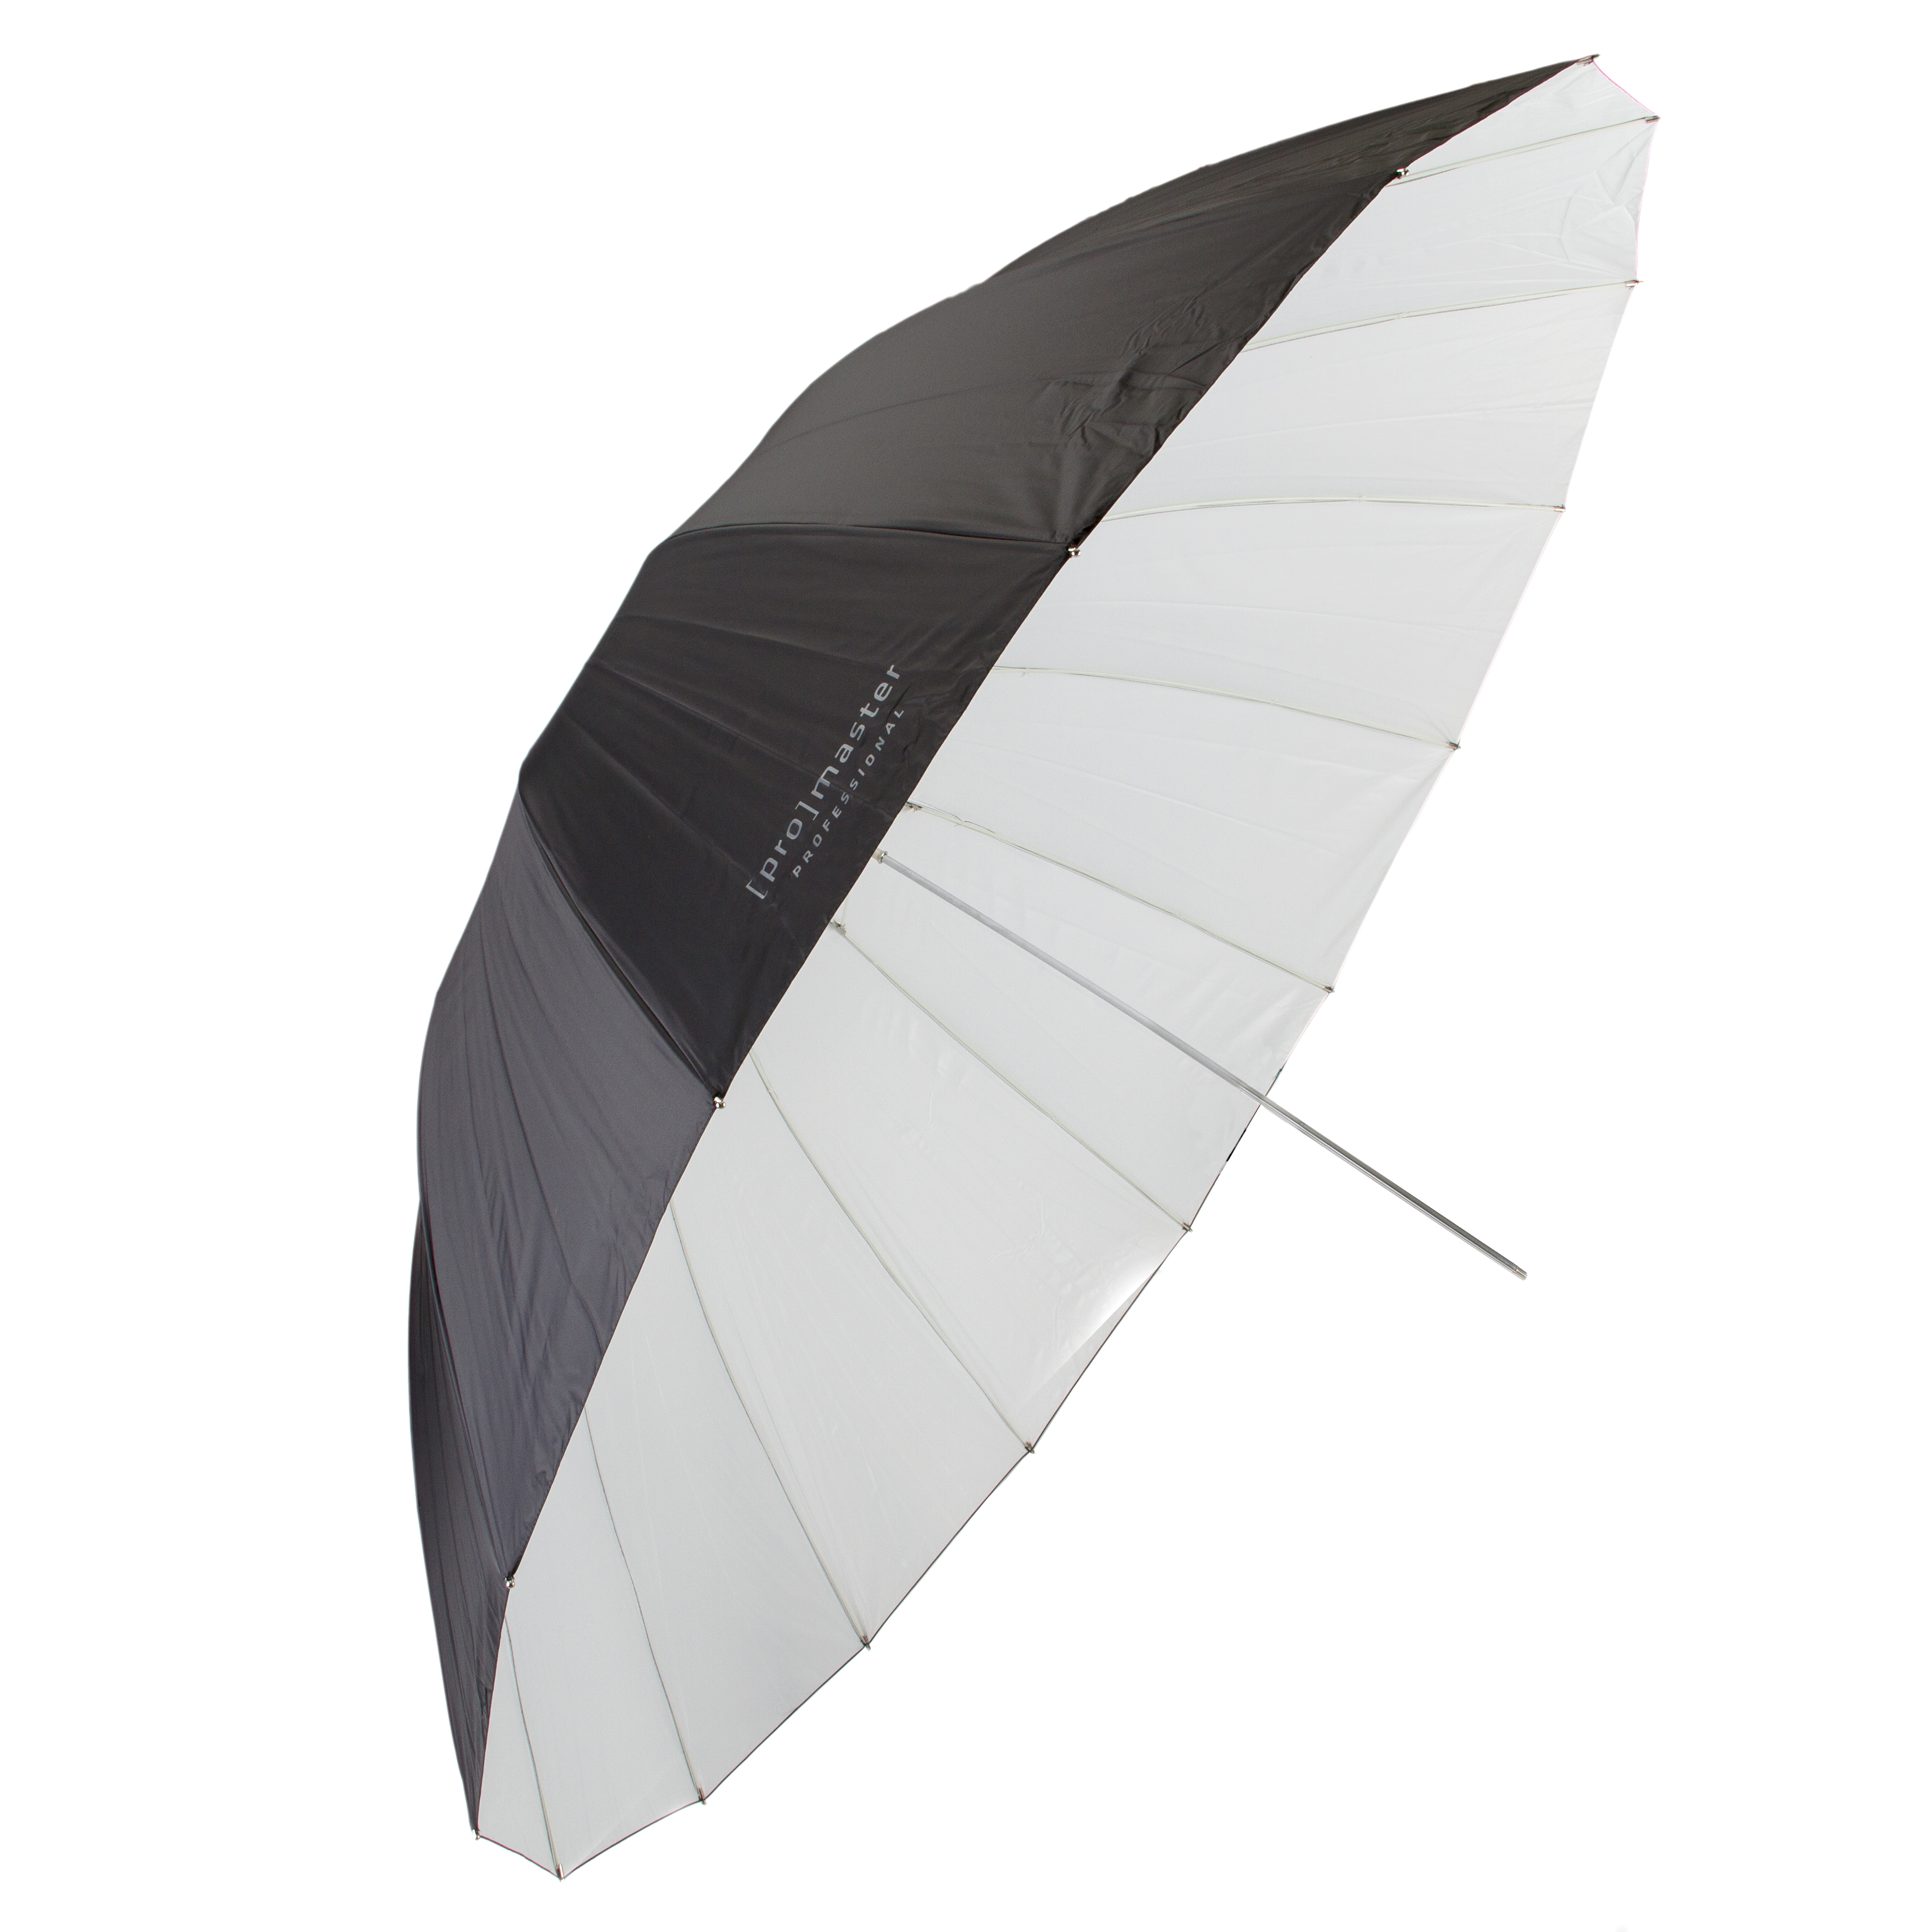 Promaster 9426 72" Black/White Professional Umbrella